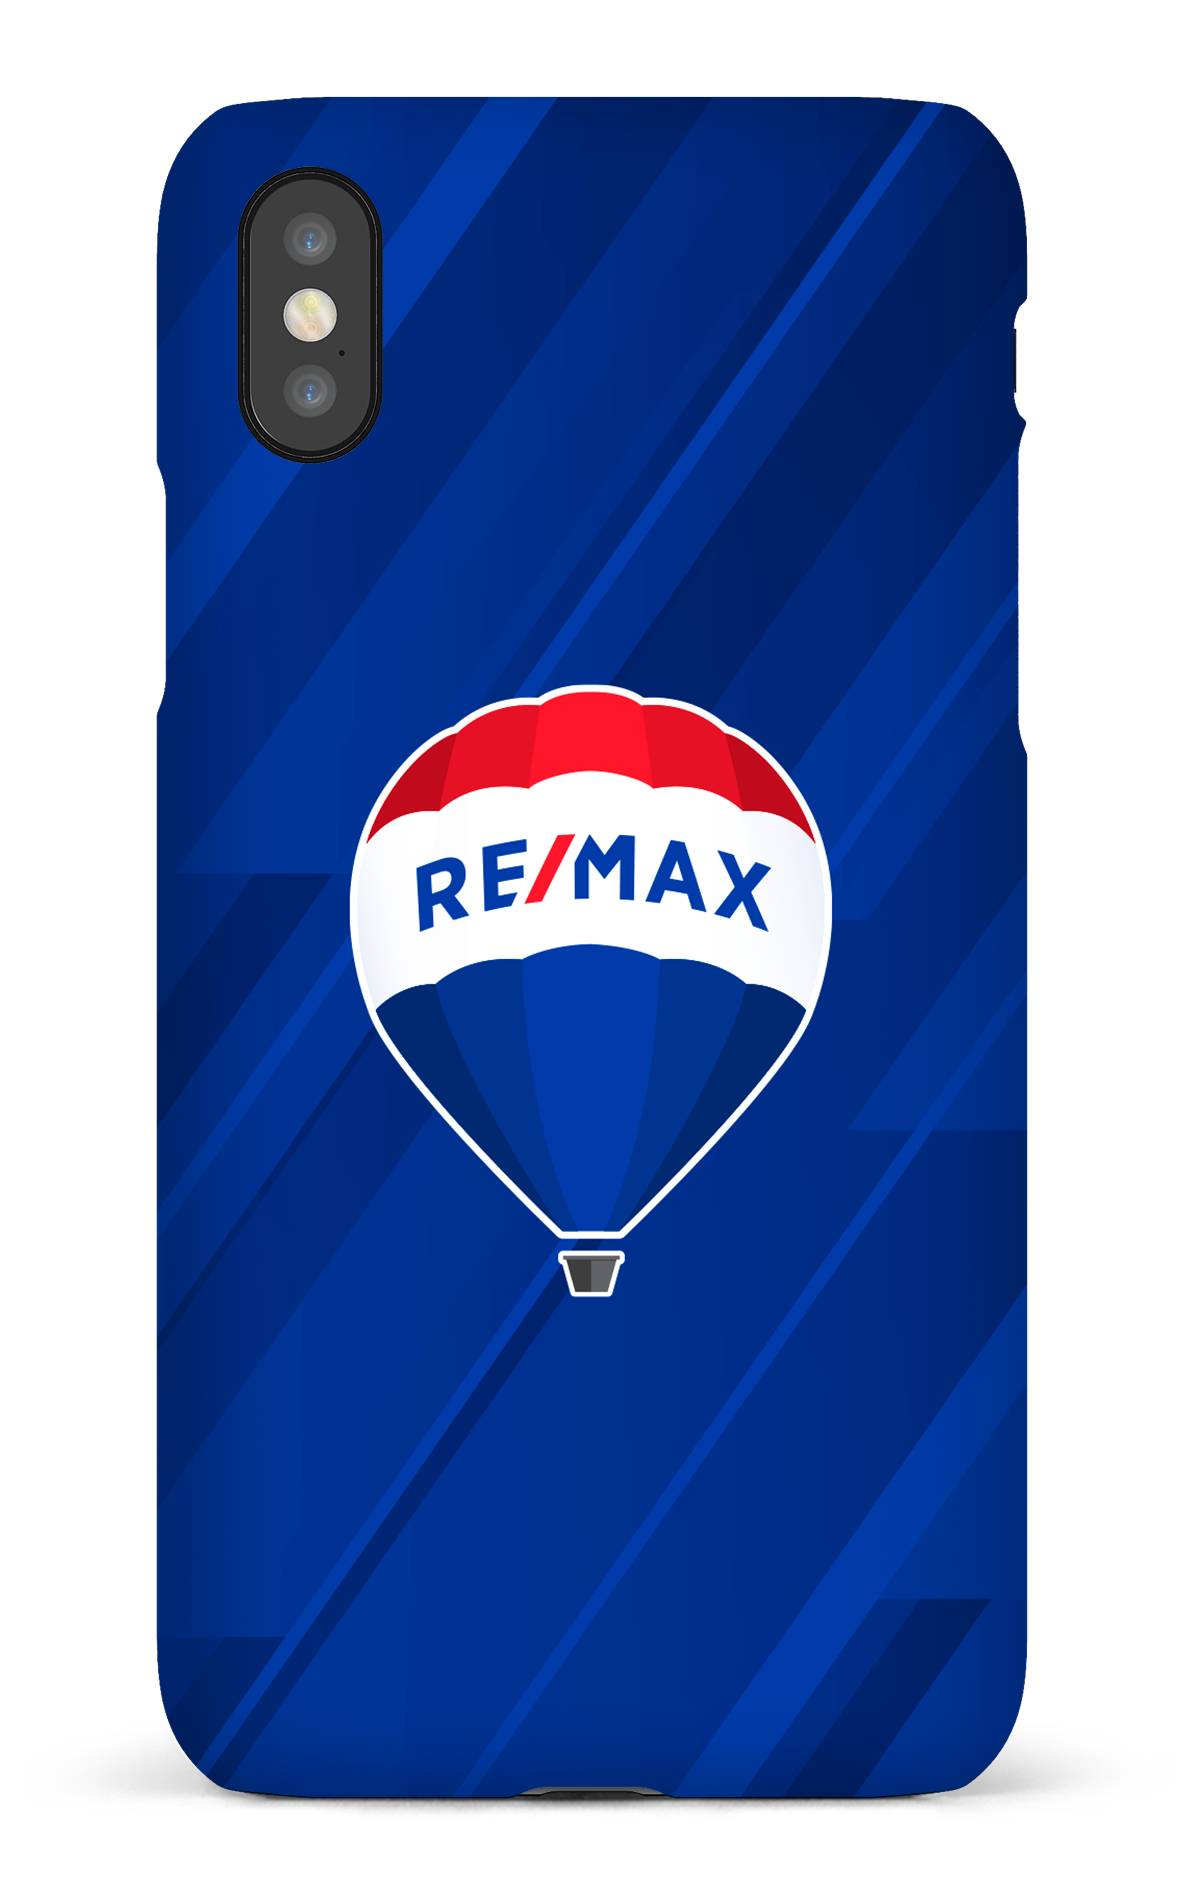 Remax Bleu - iPhone X/Xs